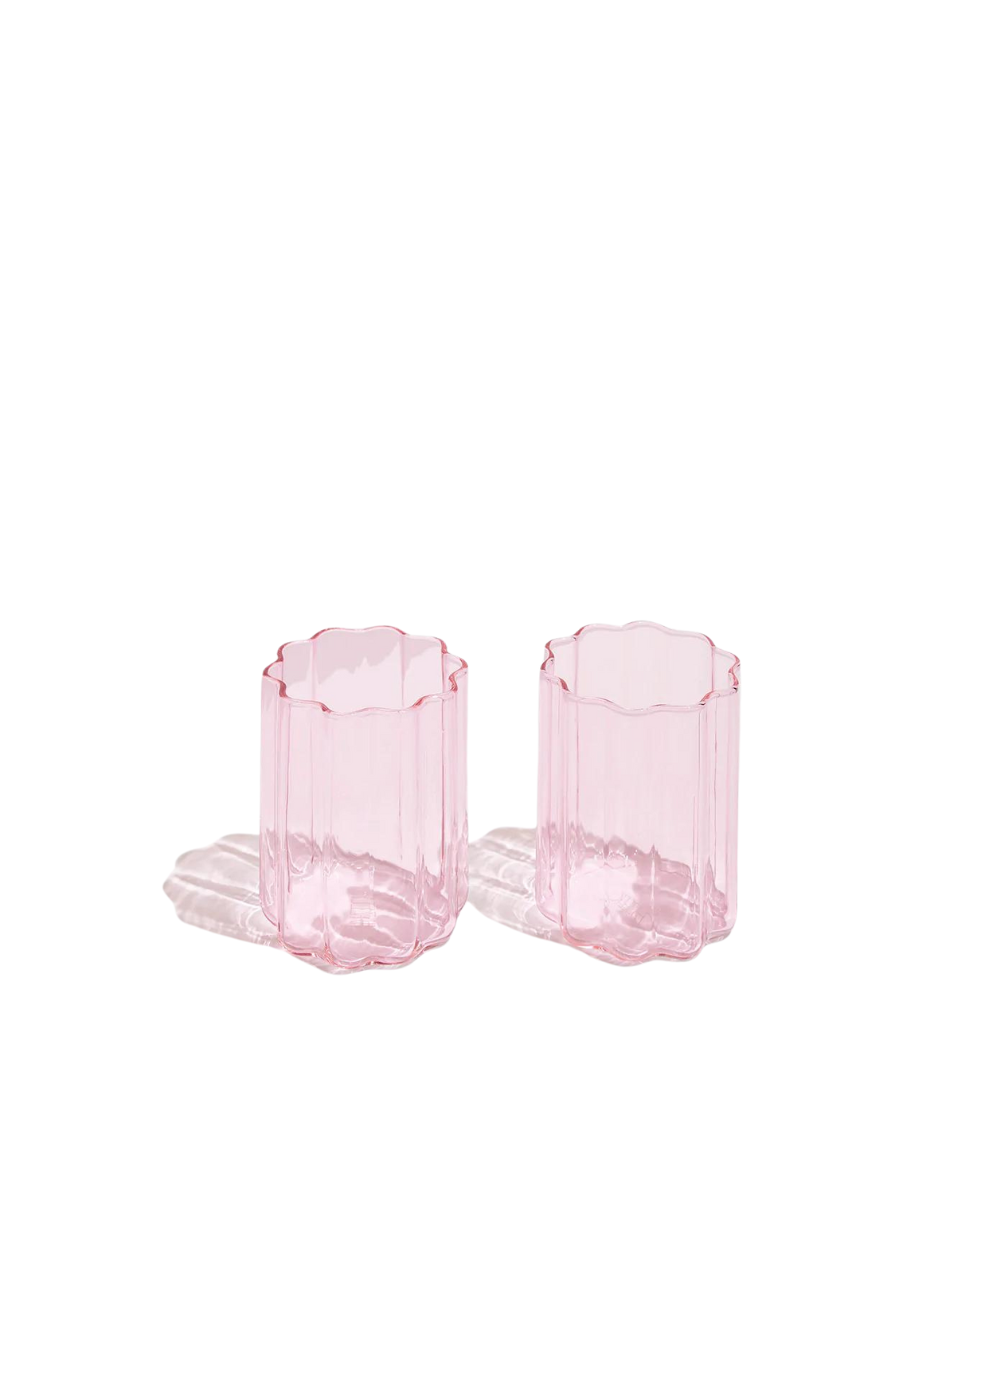 wave glass set - pink